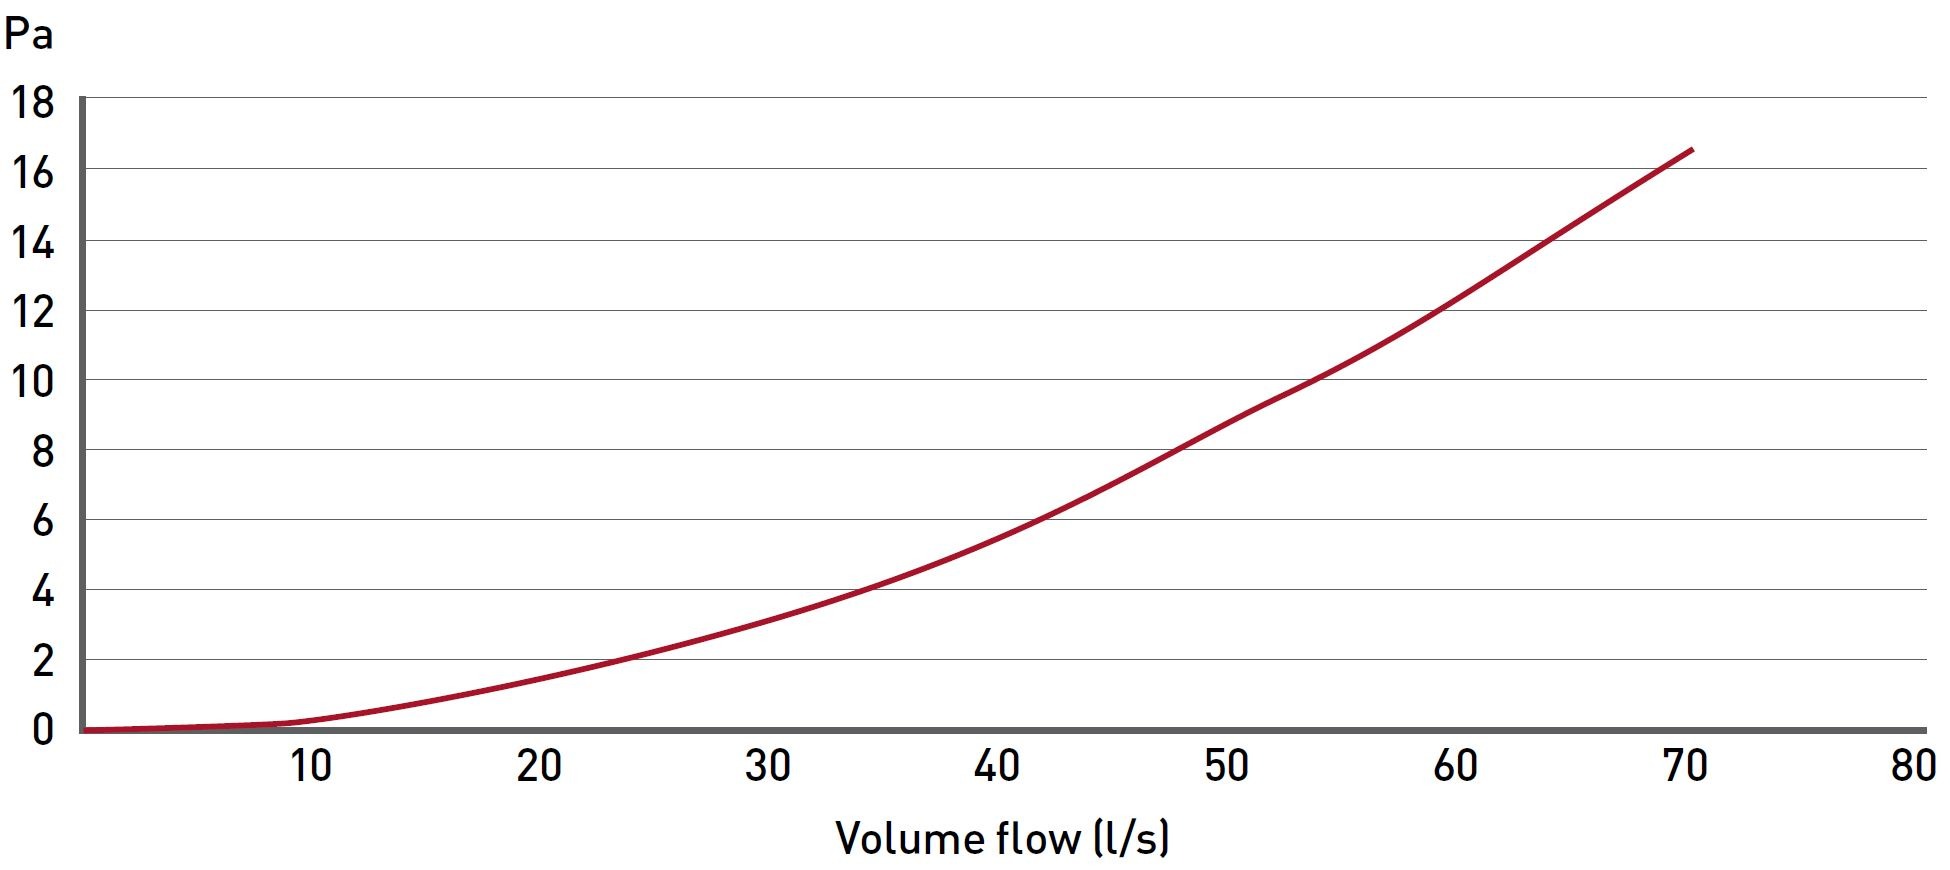 Megaduct Adapter volume flow data